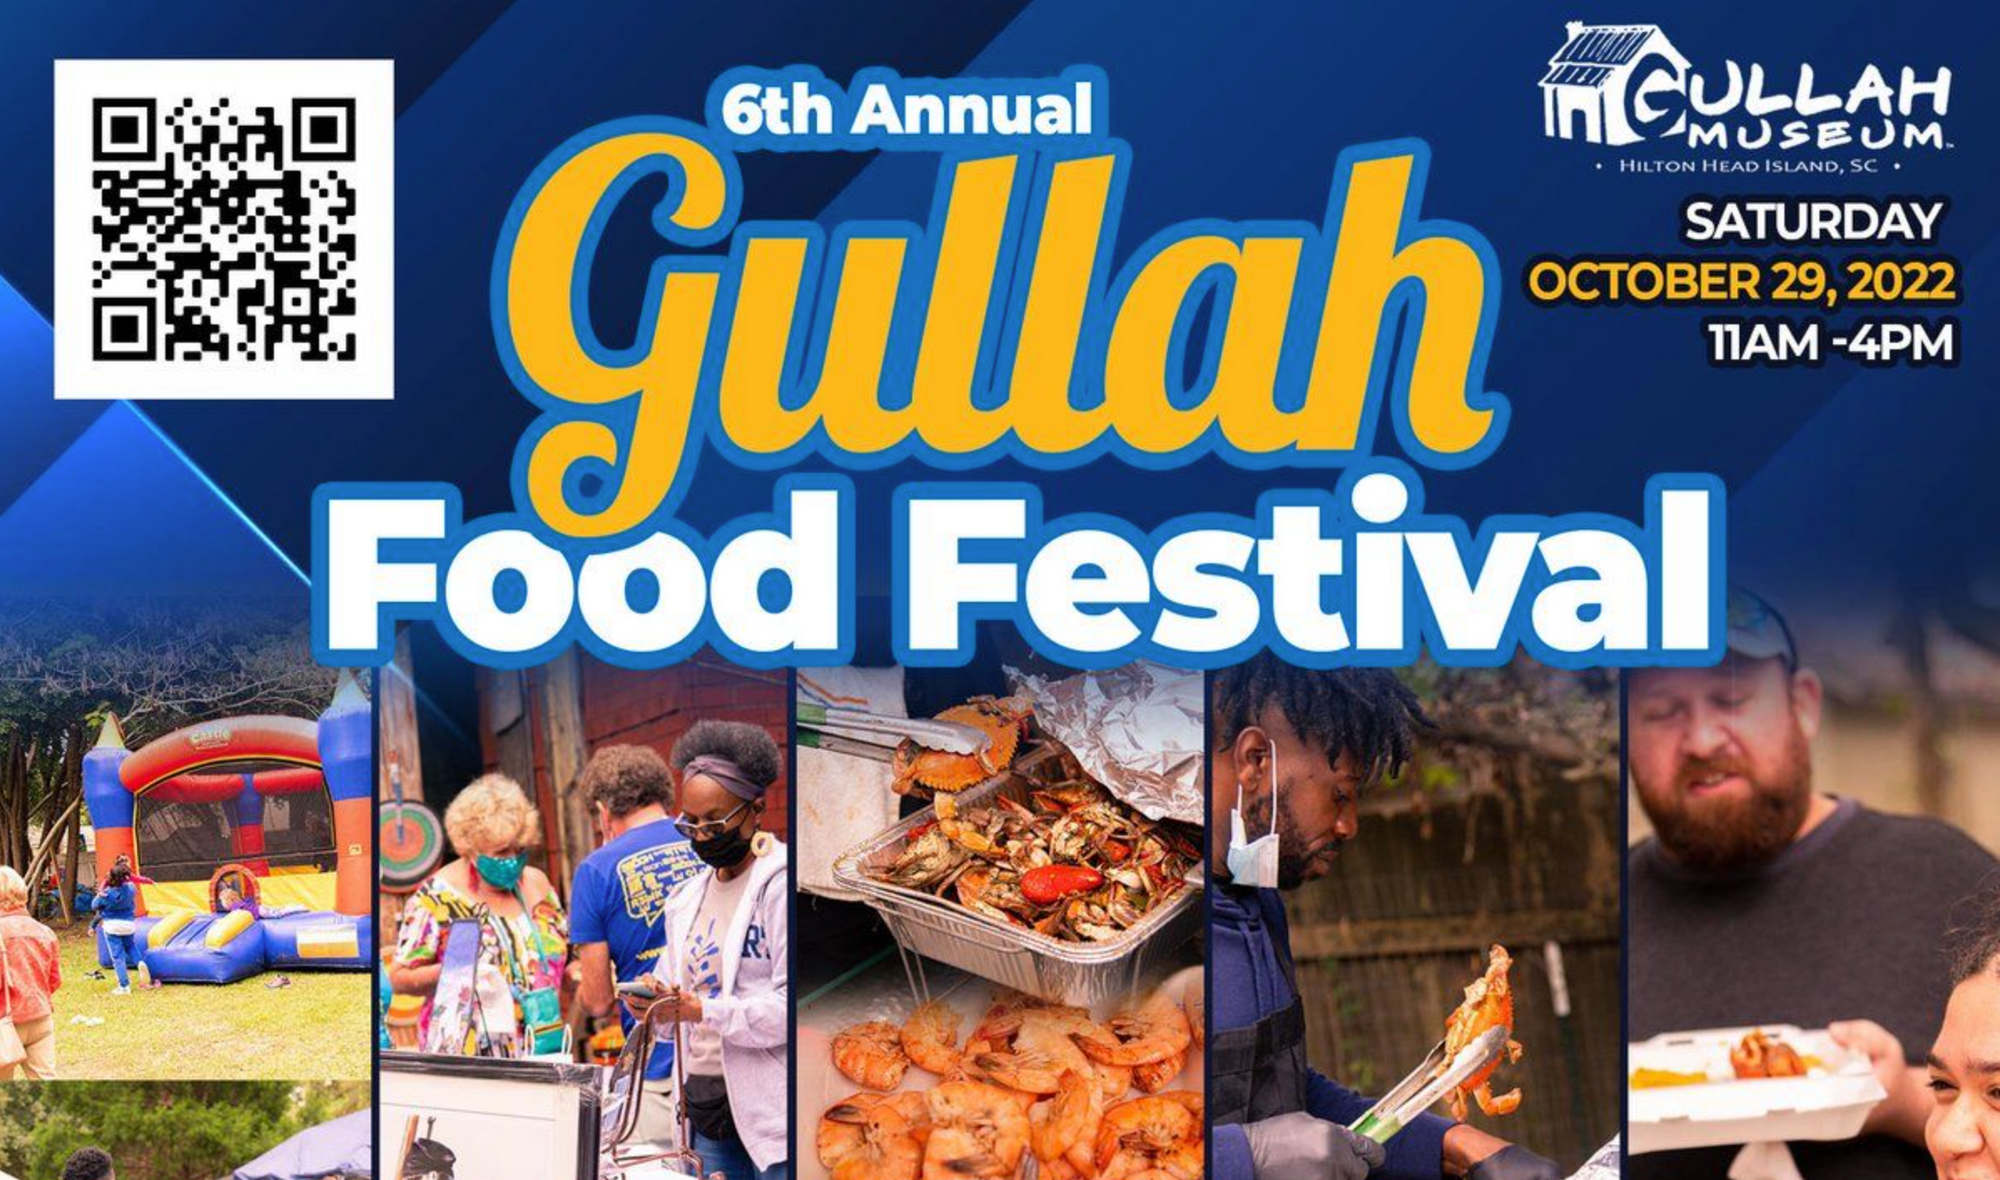 The Gullah Food Festival